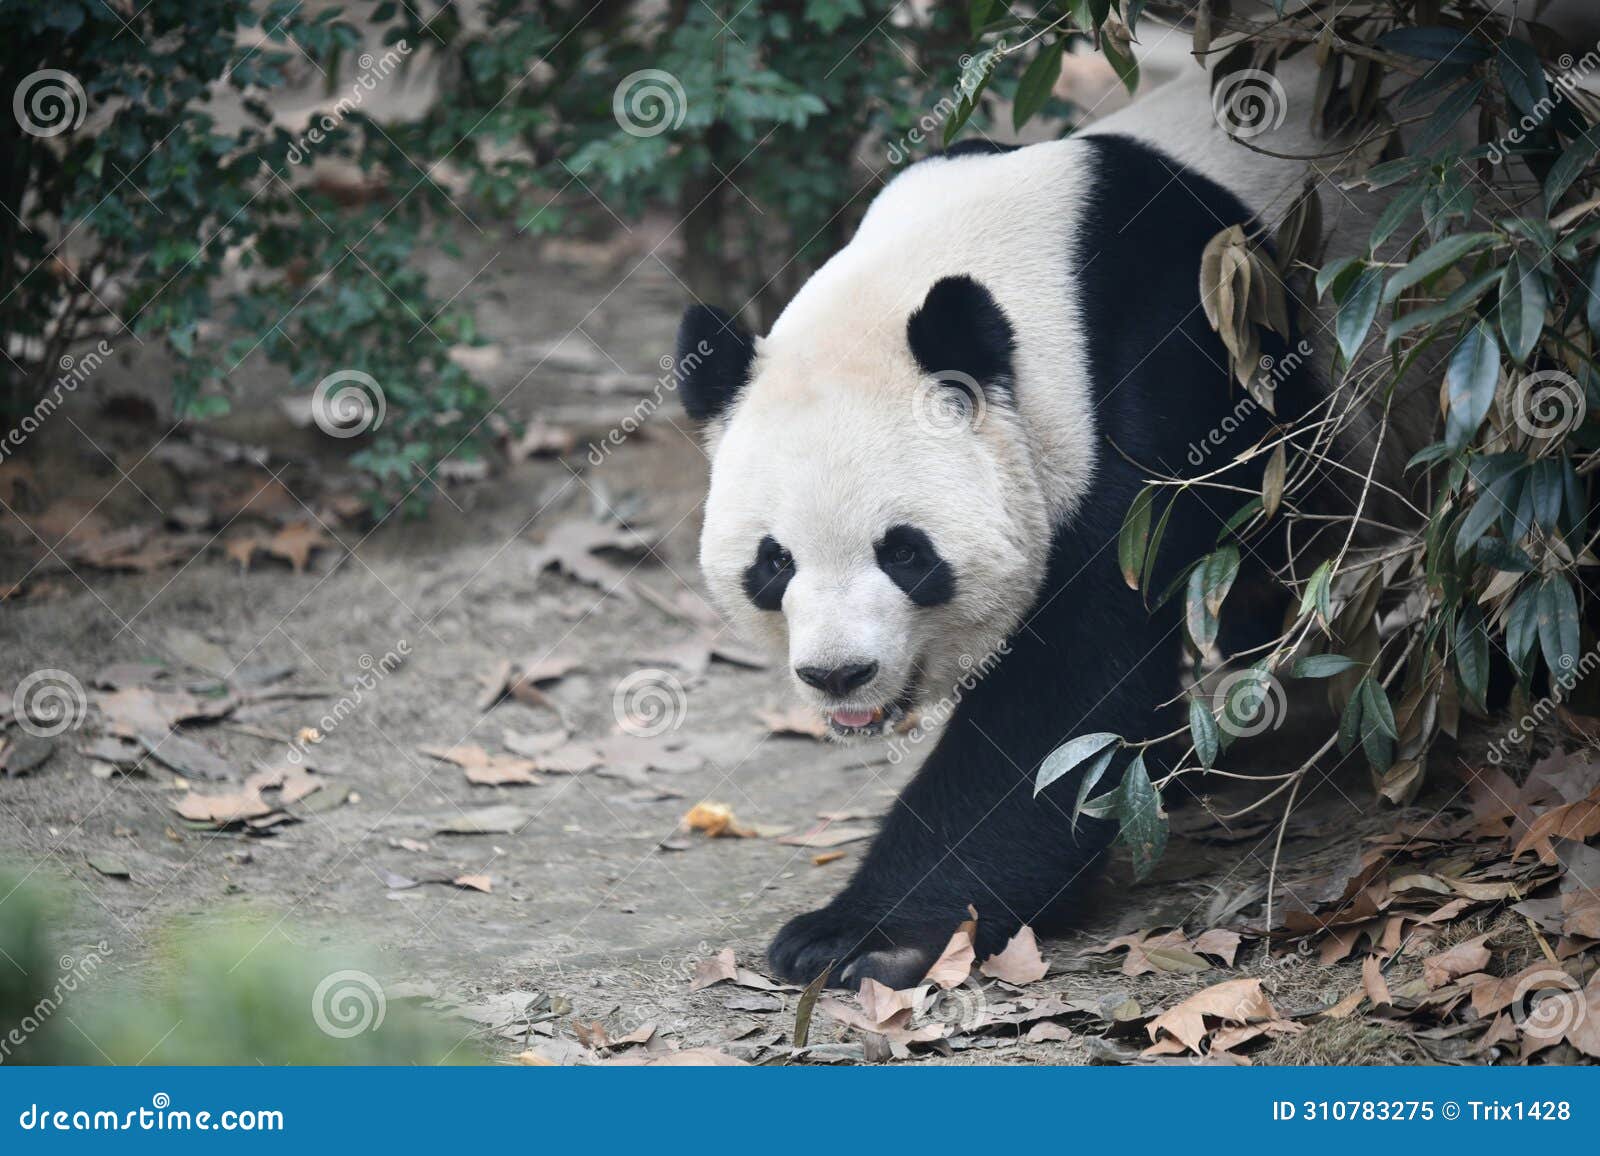 portait of a giant panda